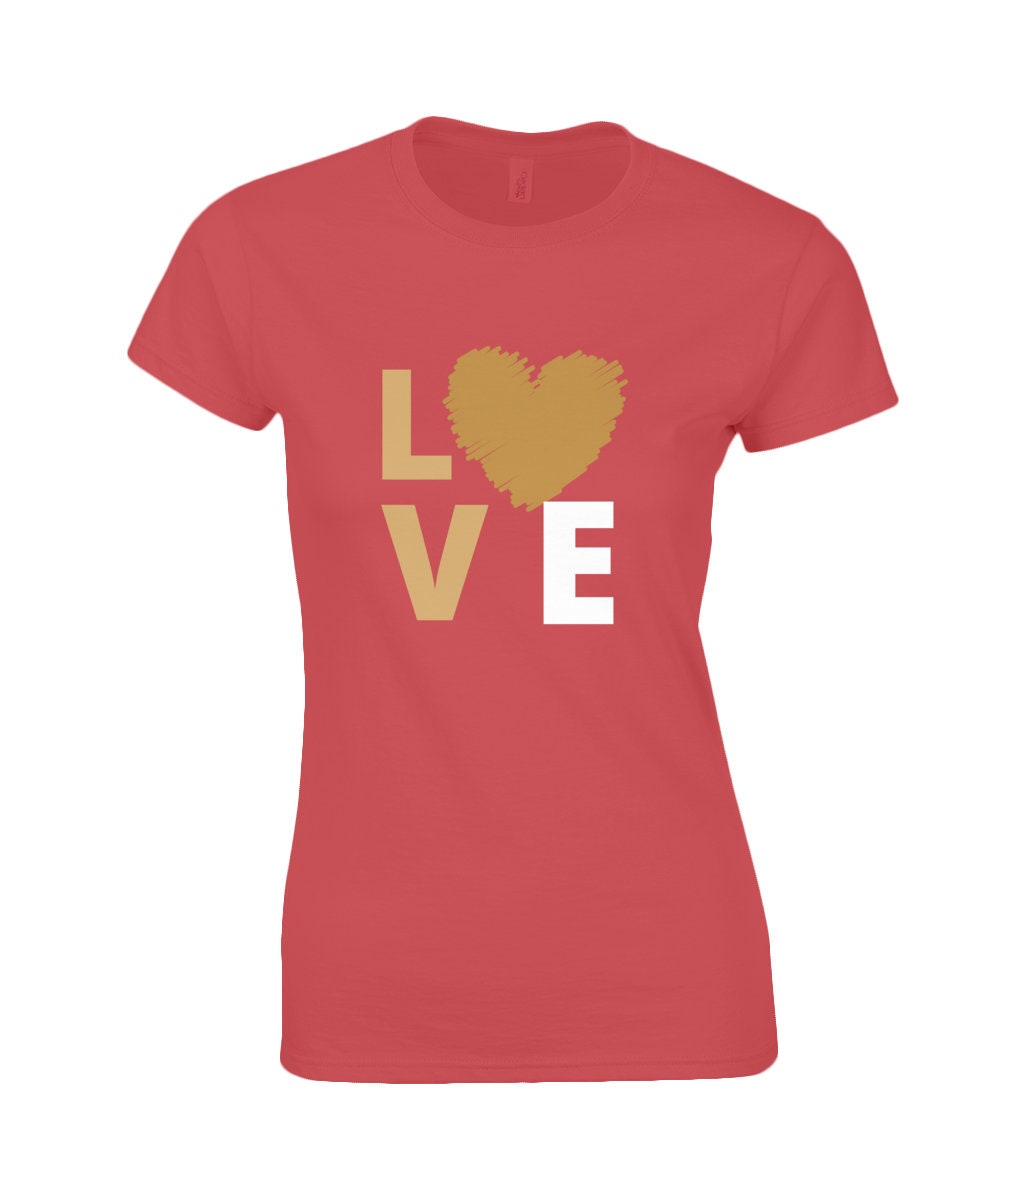 Ladies Love Tshirts Ladies Fashion Tops and Tees for Women | Etsy